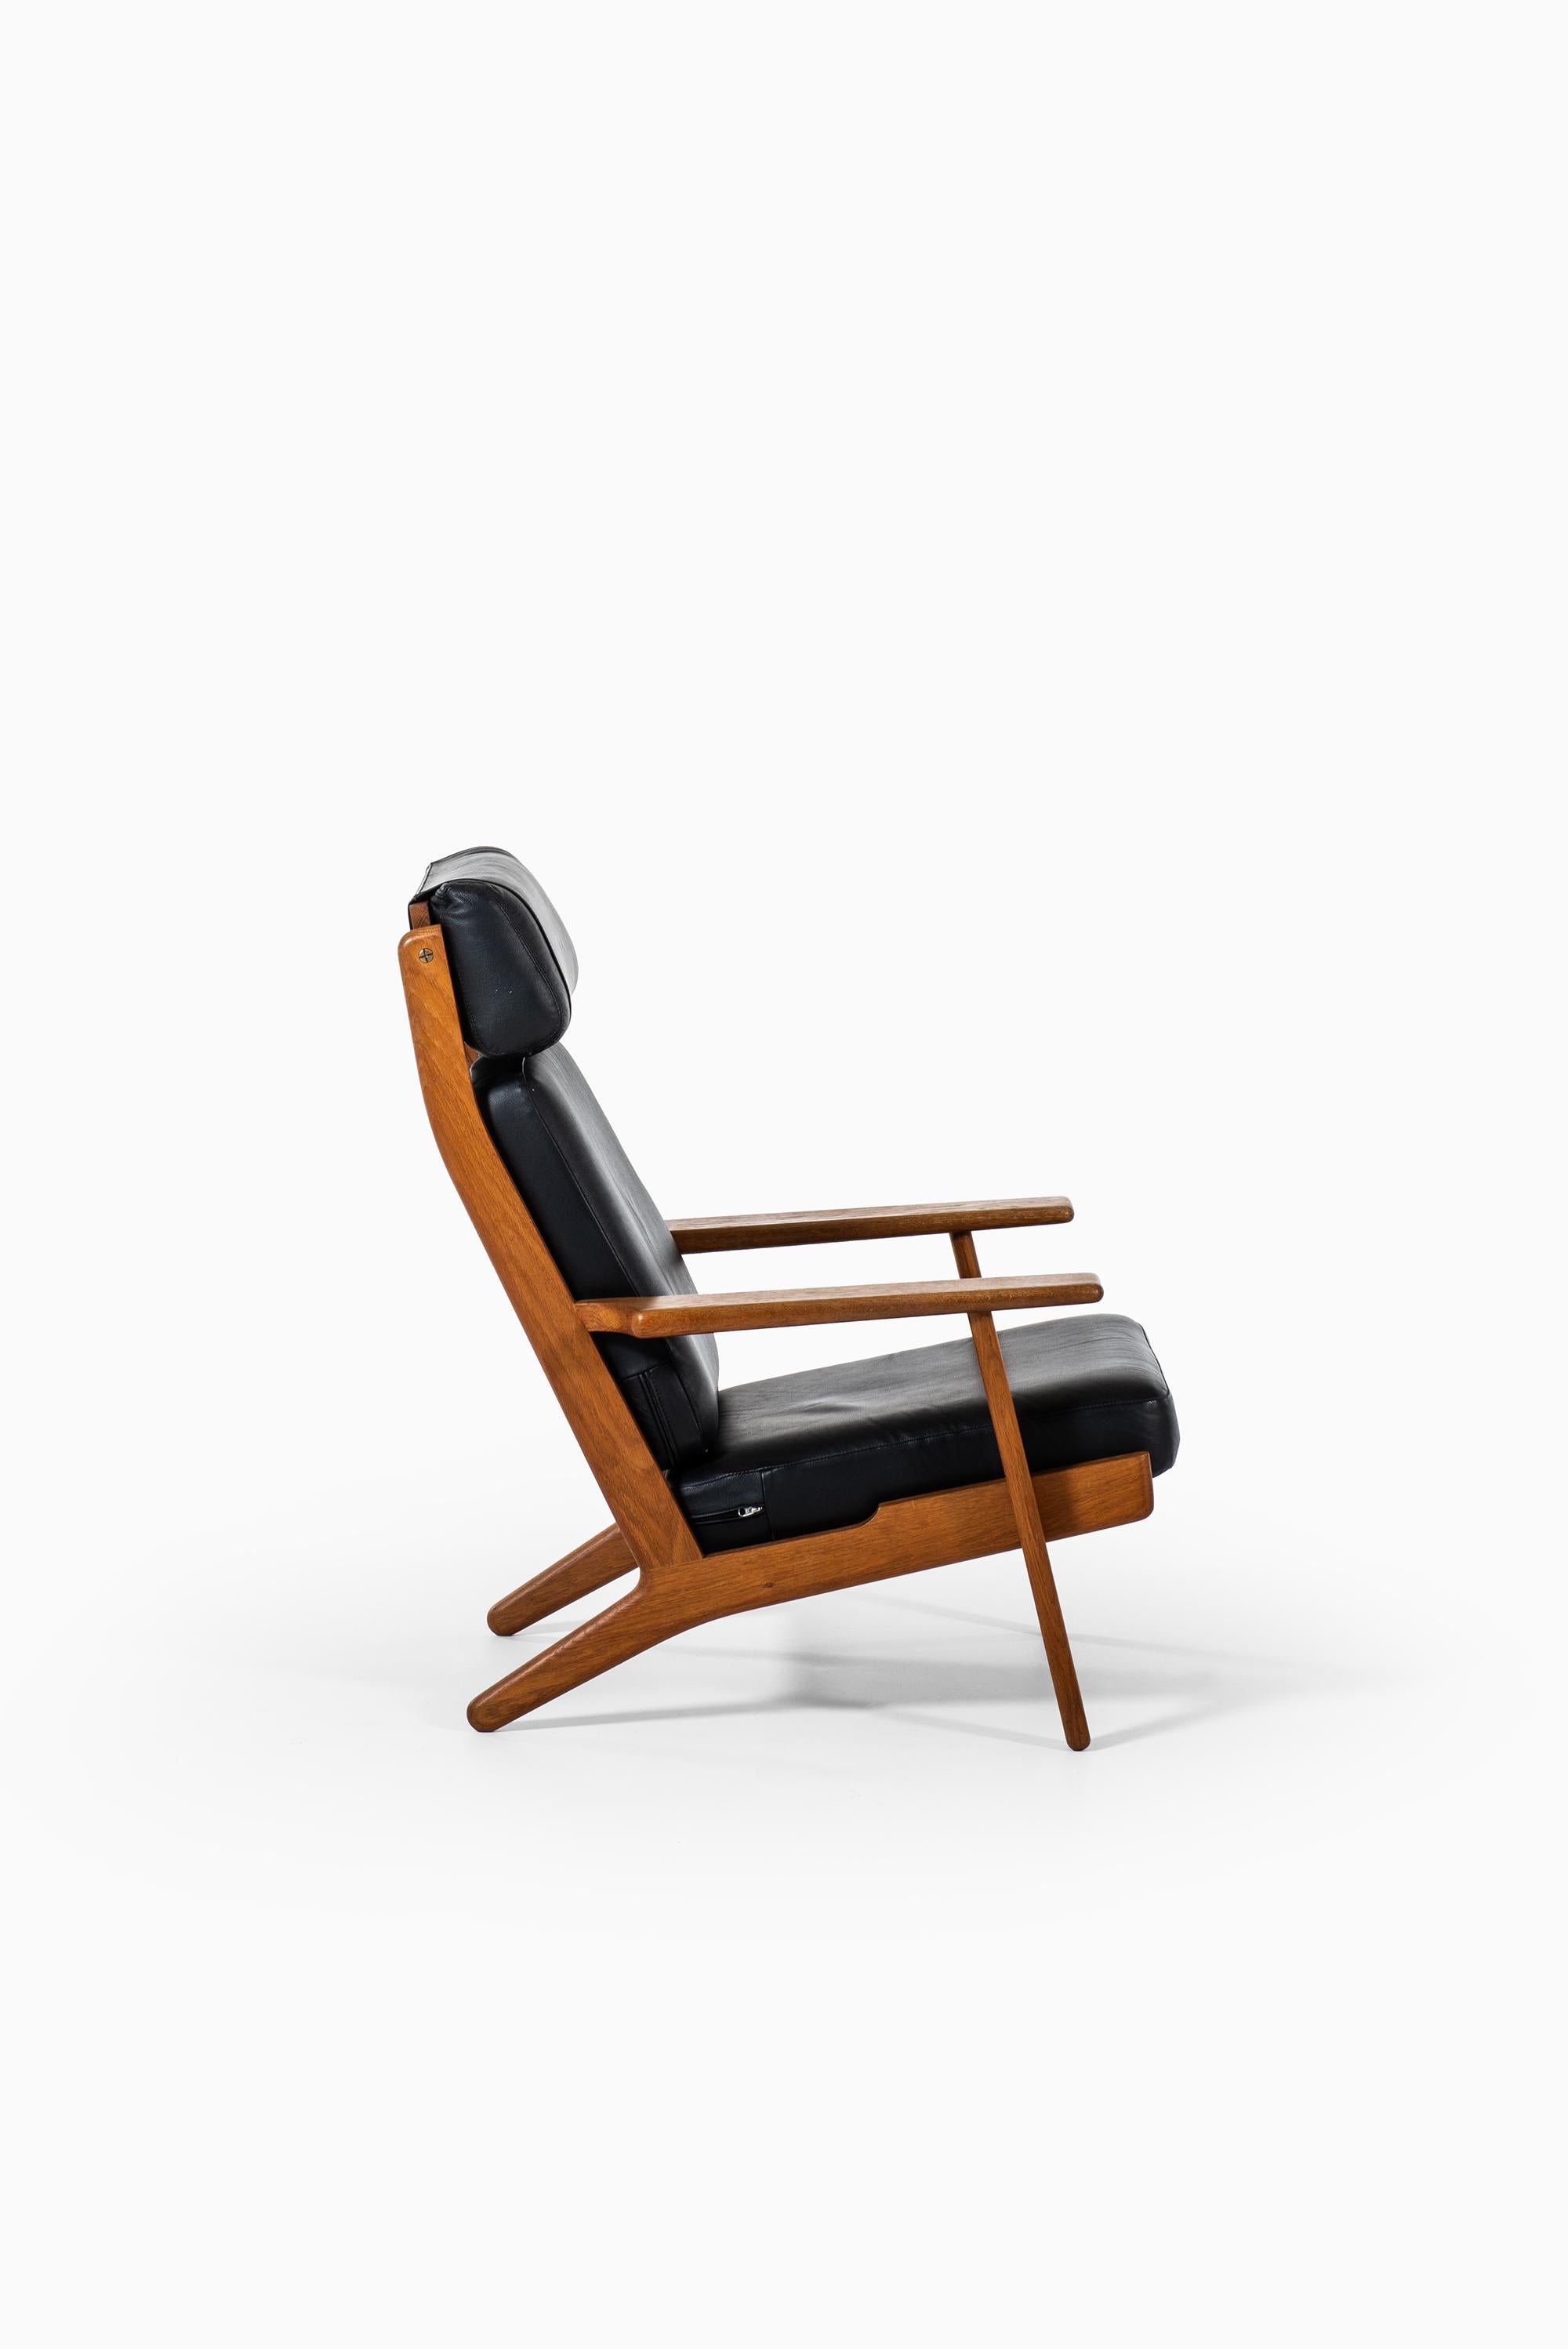 Scandinavian Modern Hans Wegner Easy Chair Model GE-290 by GETAMA in Denmark